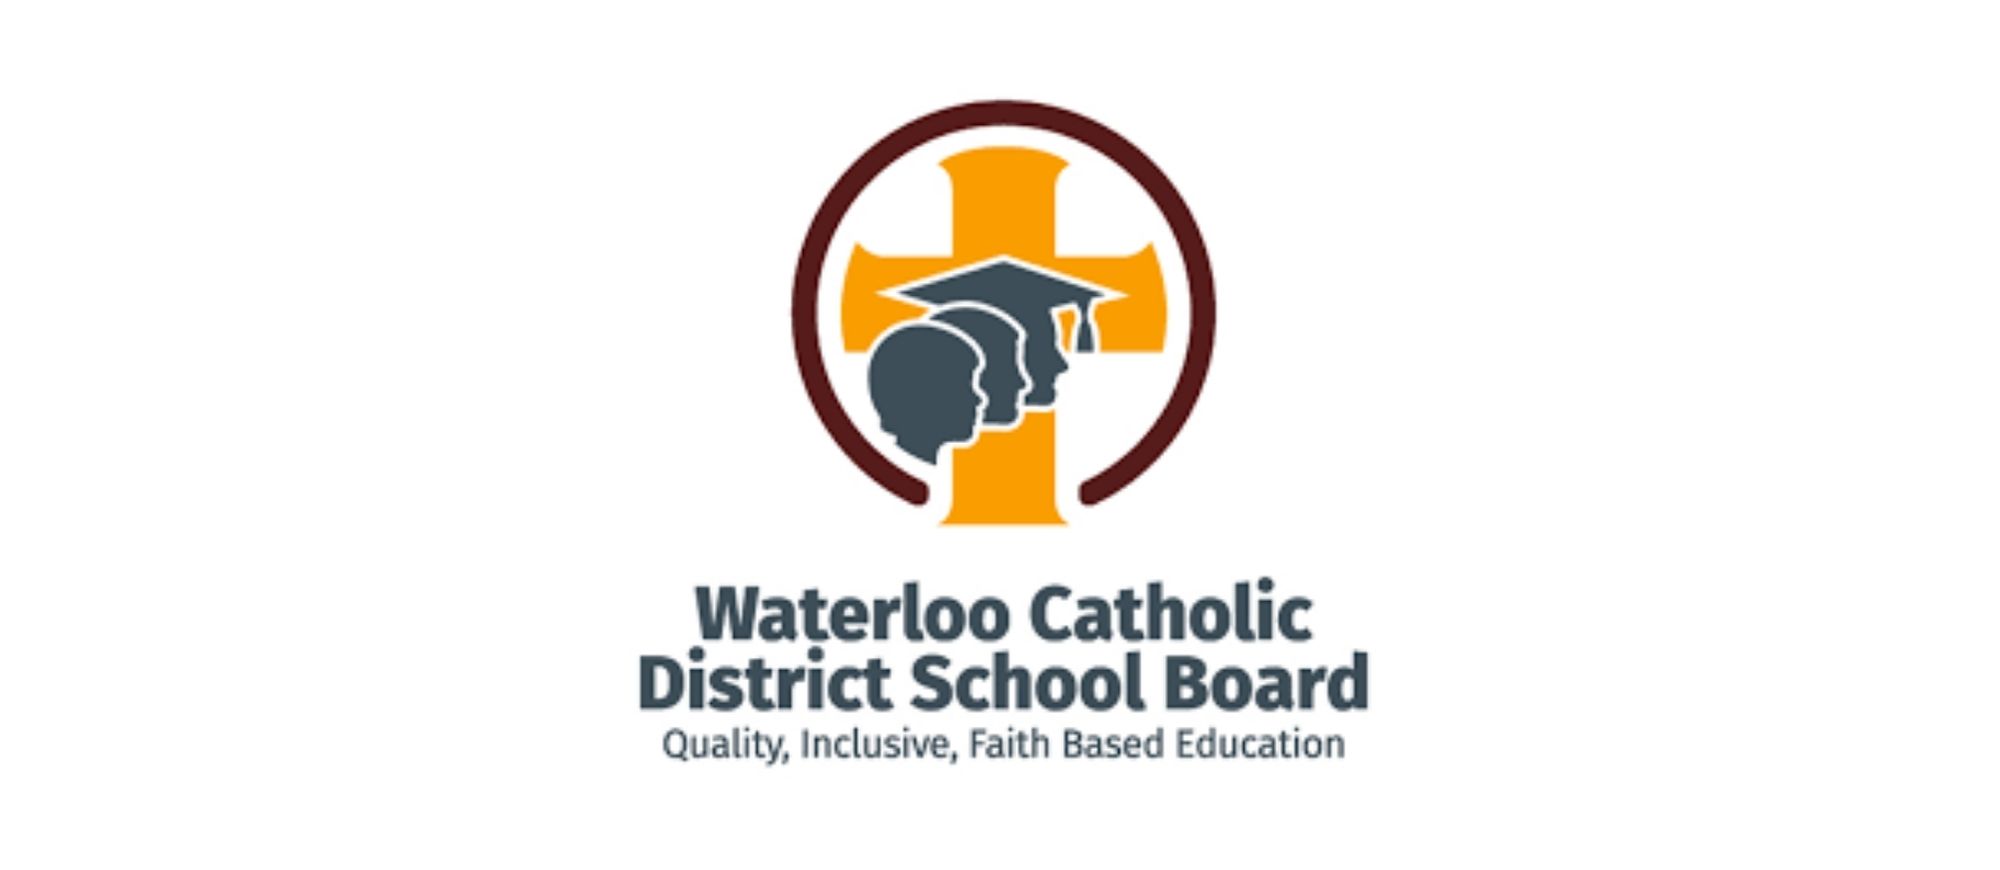 Waterloo Catholic District School Board logo